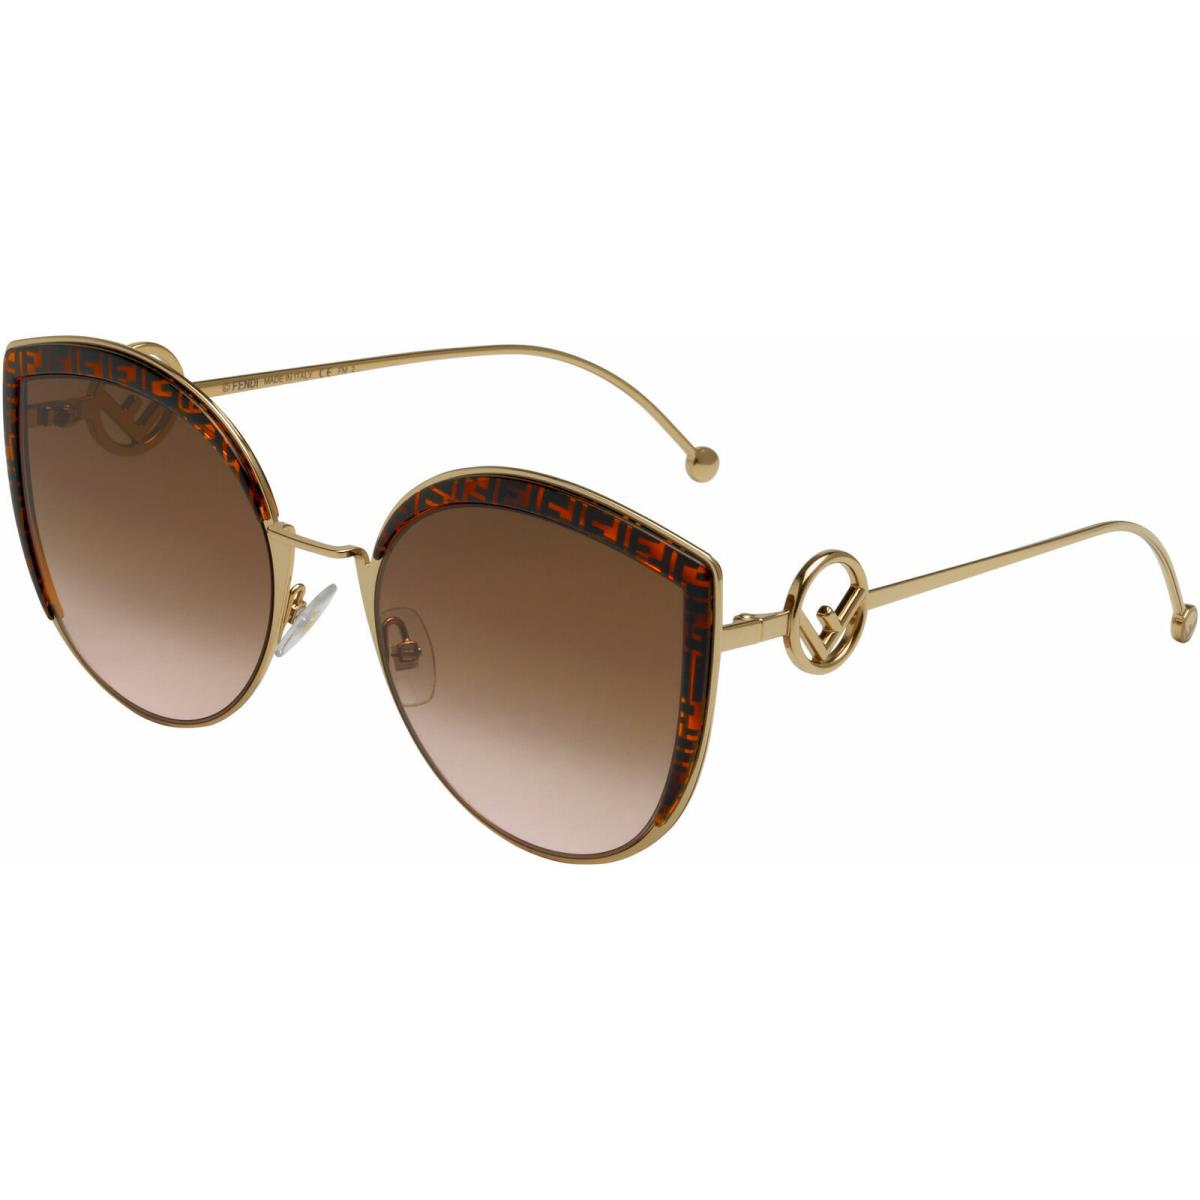 Fendi Sunglasses FF0290S VH8-M2 58mm Gold / Brown Pink Gradient Lens